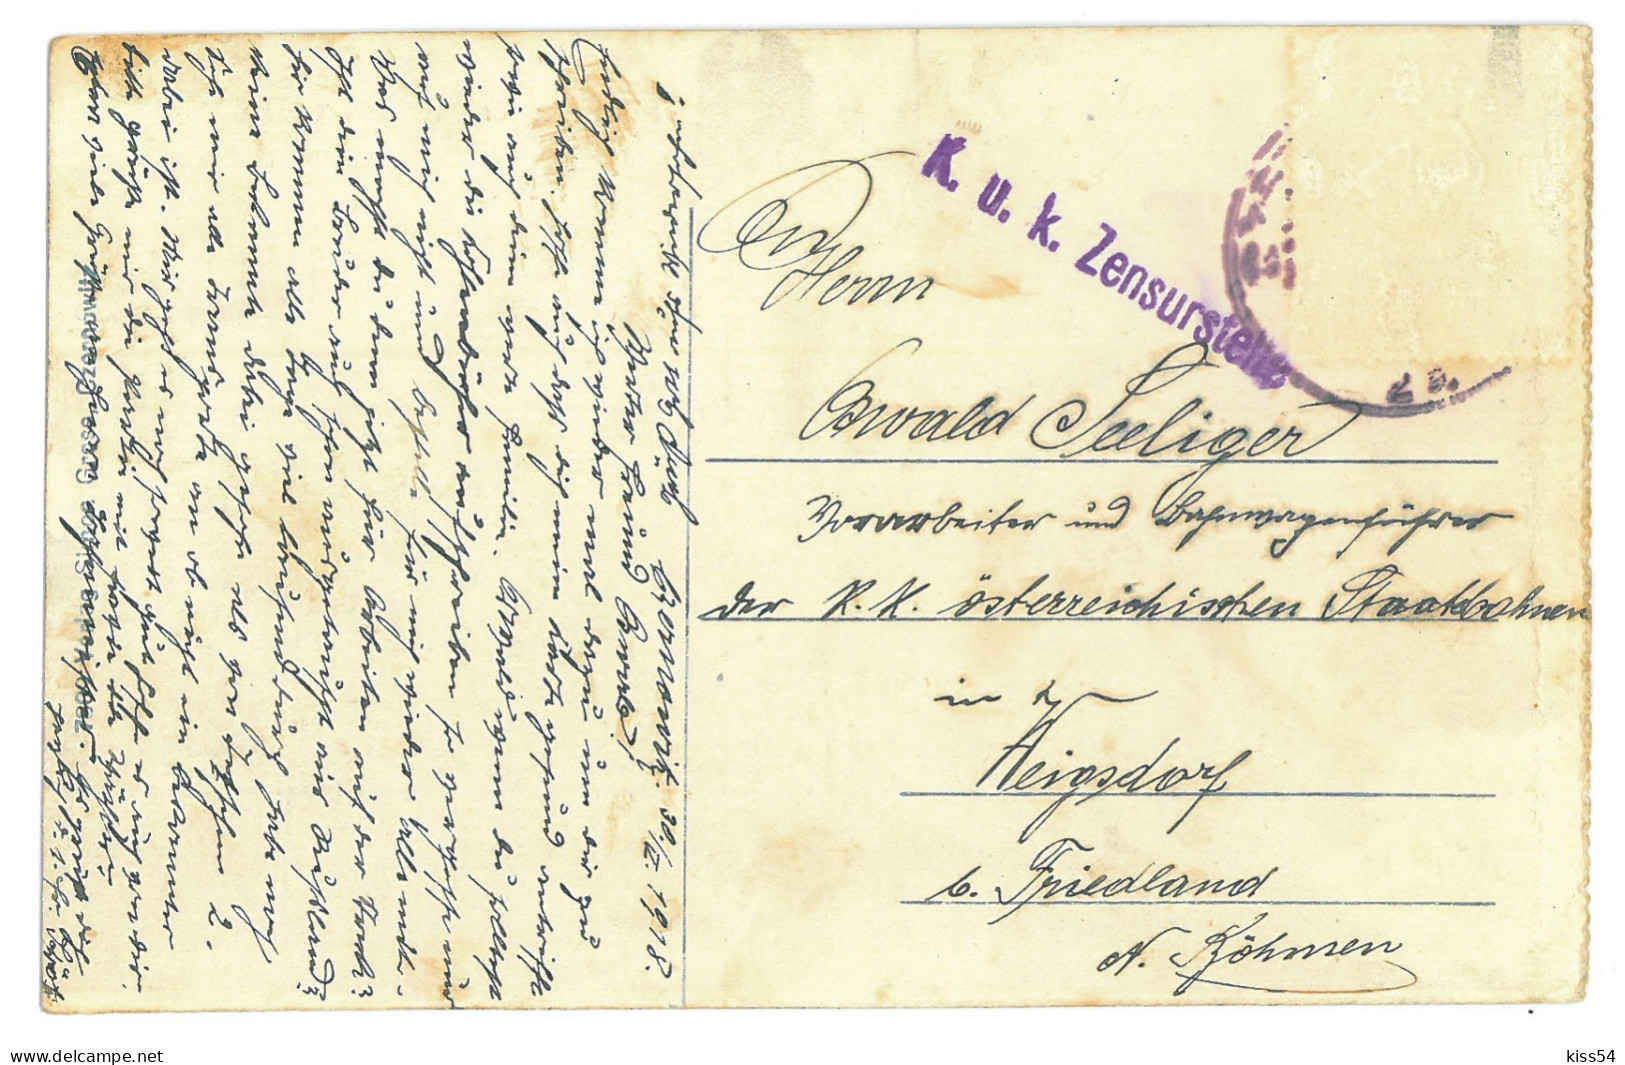 UK 34 - 16196 CZERNOWITZ, Bukowina, Shiller Theatre, Ukraine - Old Postcard, CENSOR - Used - 1918 - Ukraine